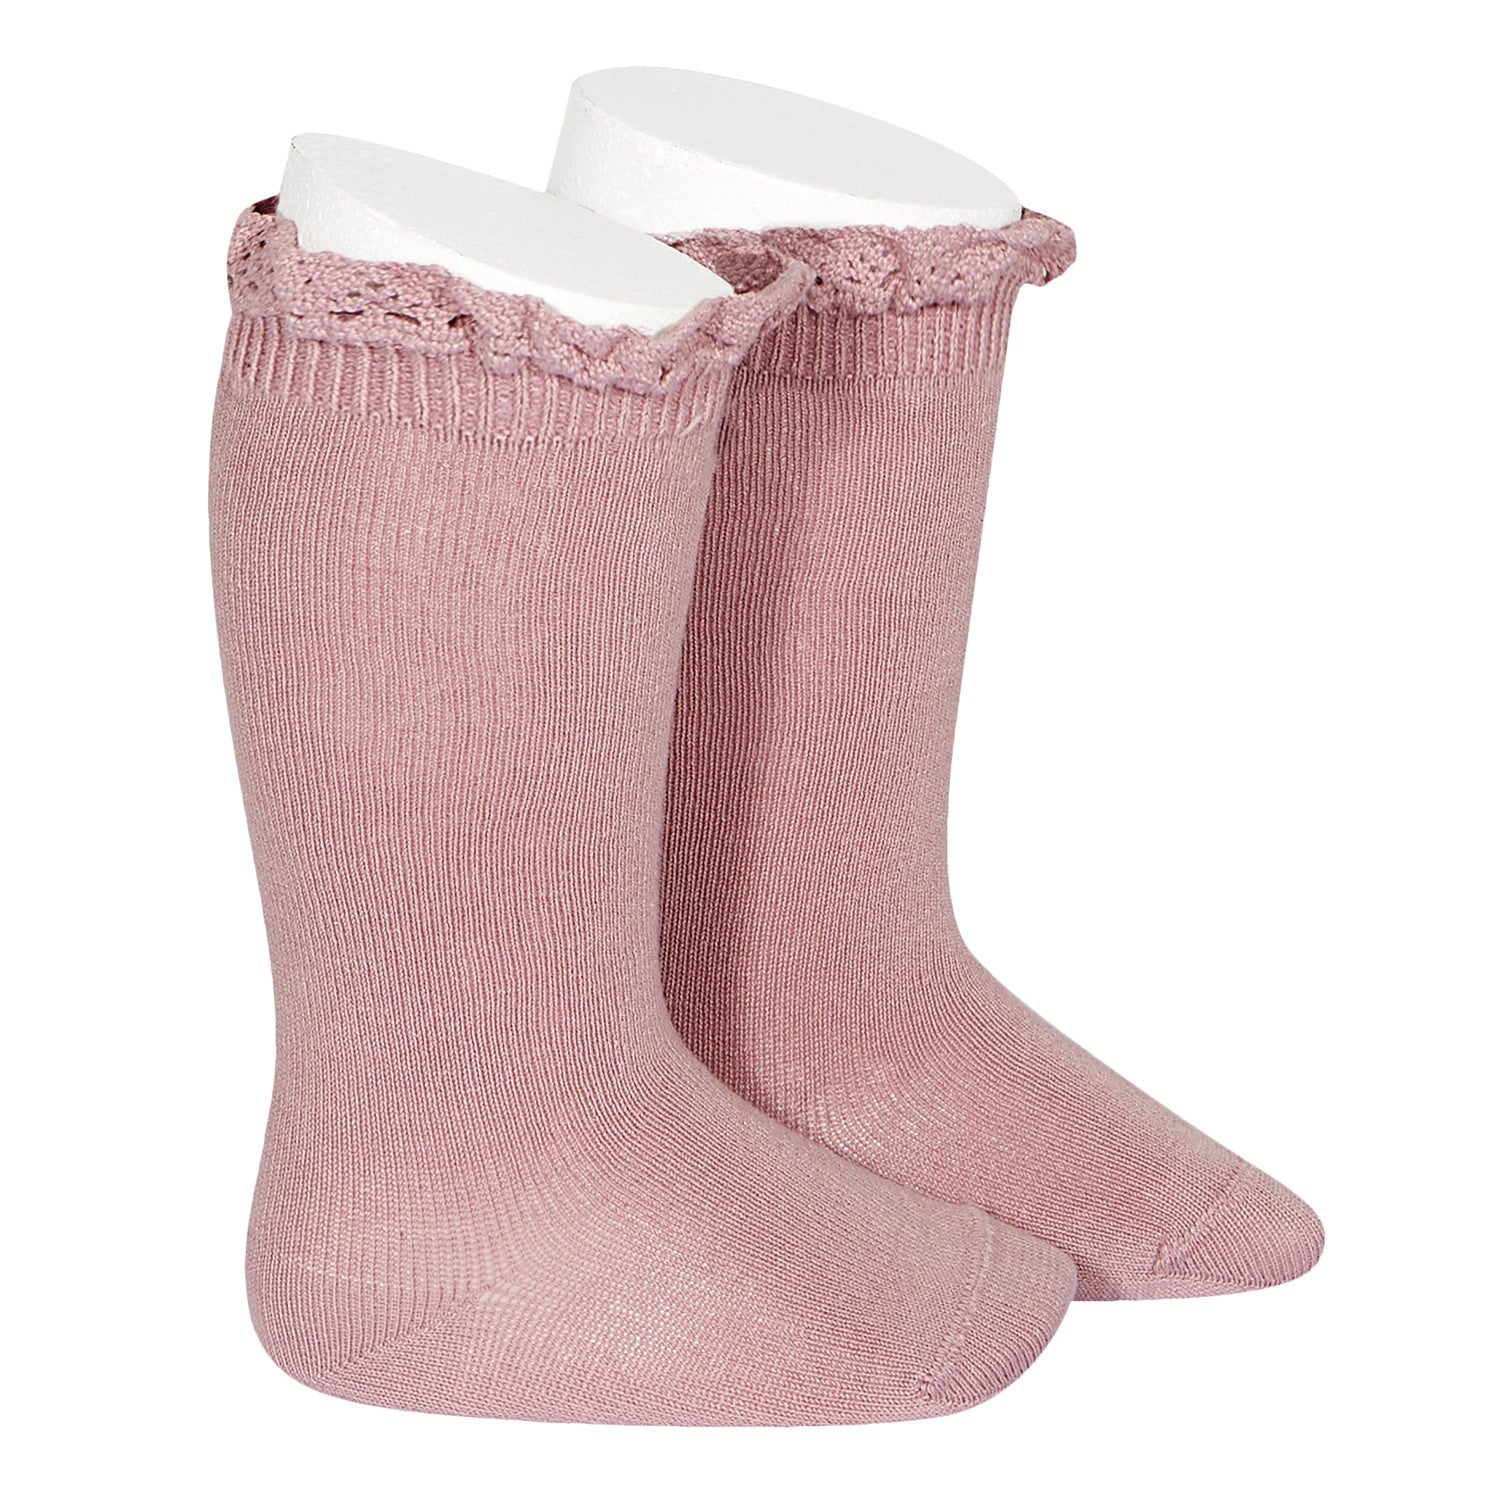 Socks Tamarisco - Knee socks with lace edging cuff-24092-670